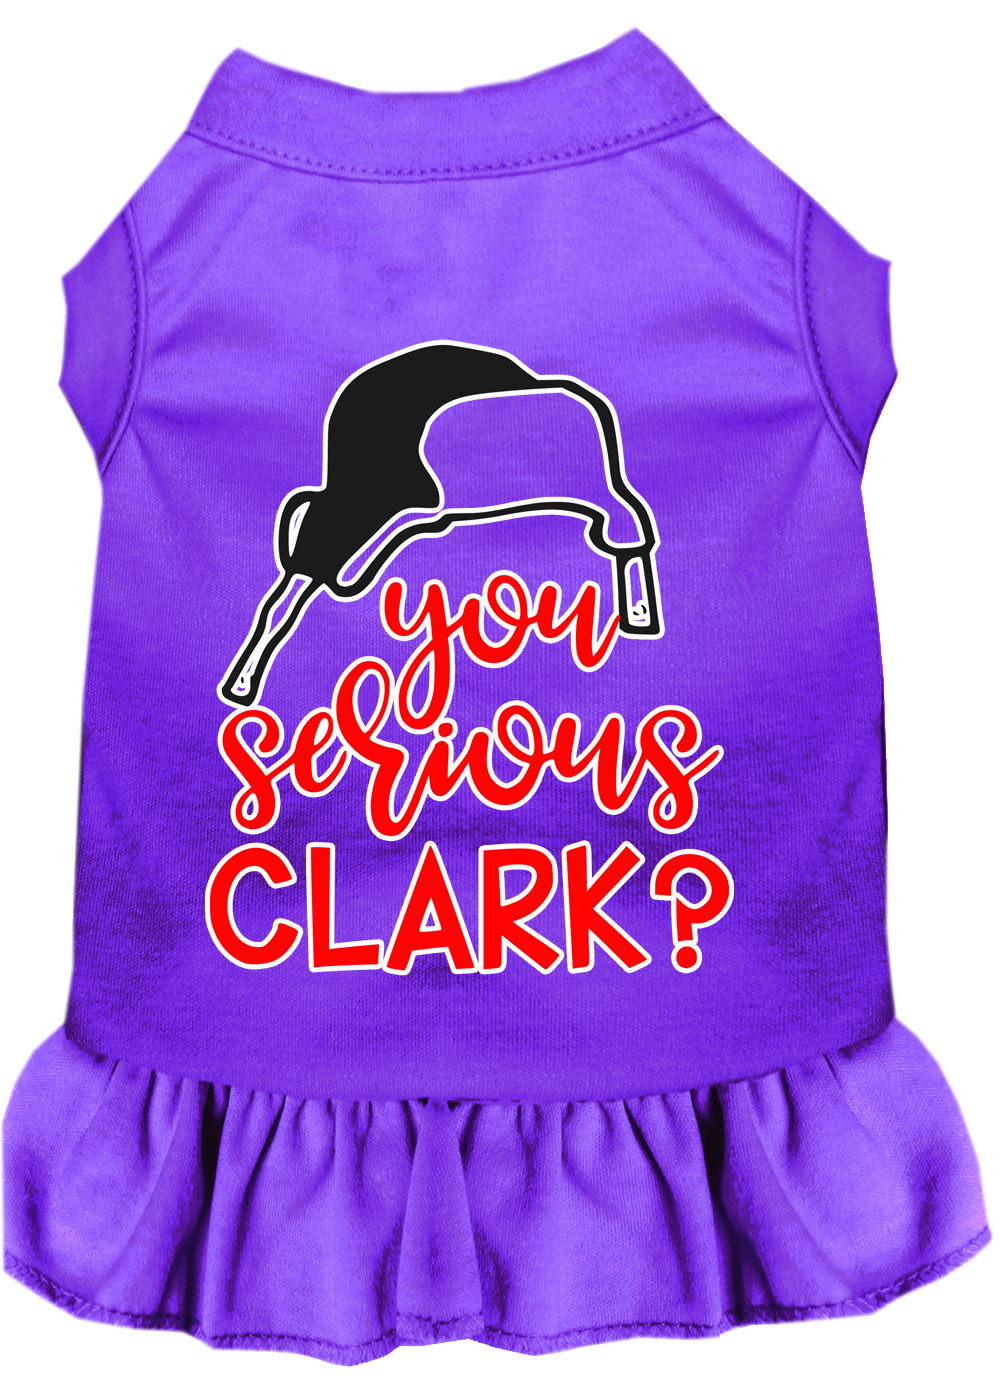 You Serious Clark? Screen Print Dog Dress Purple XXL